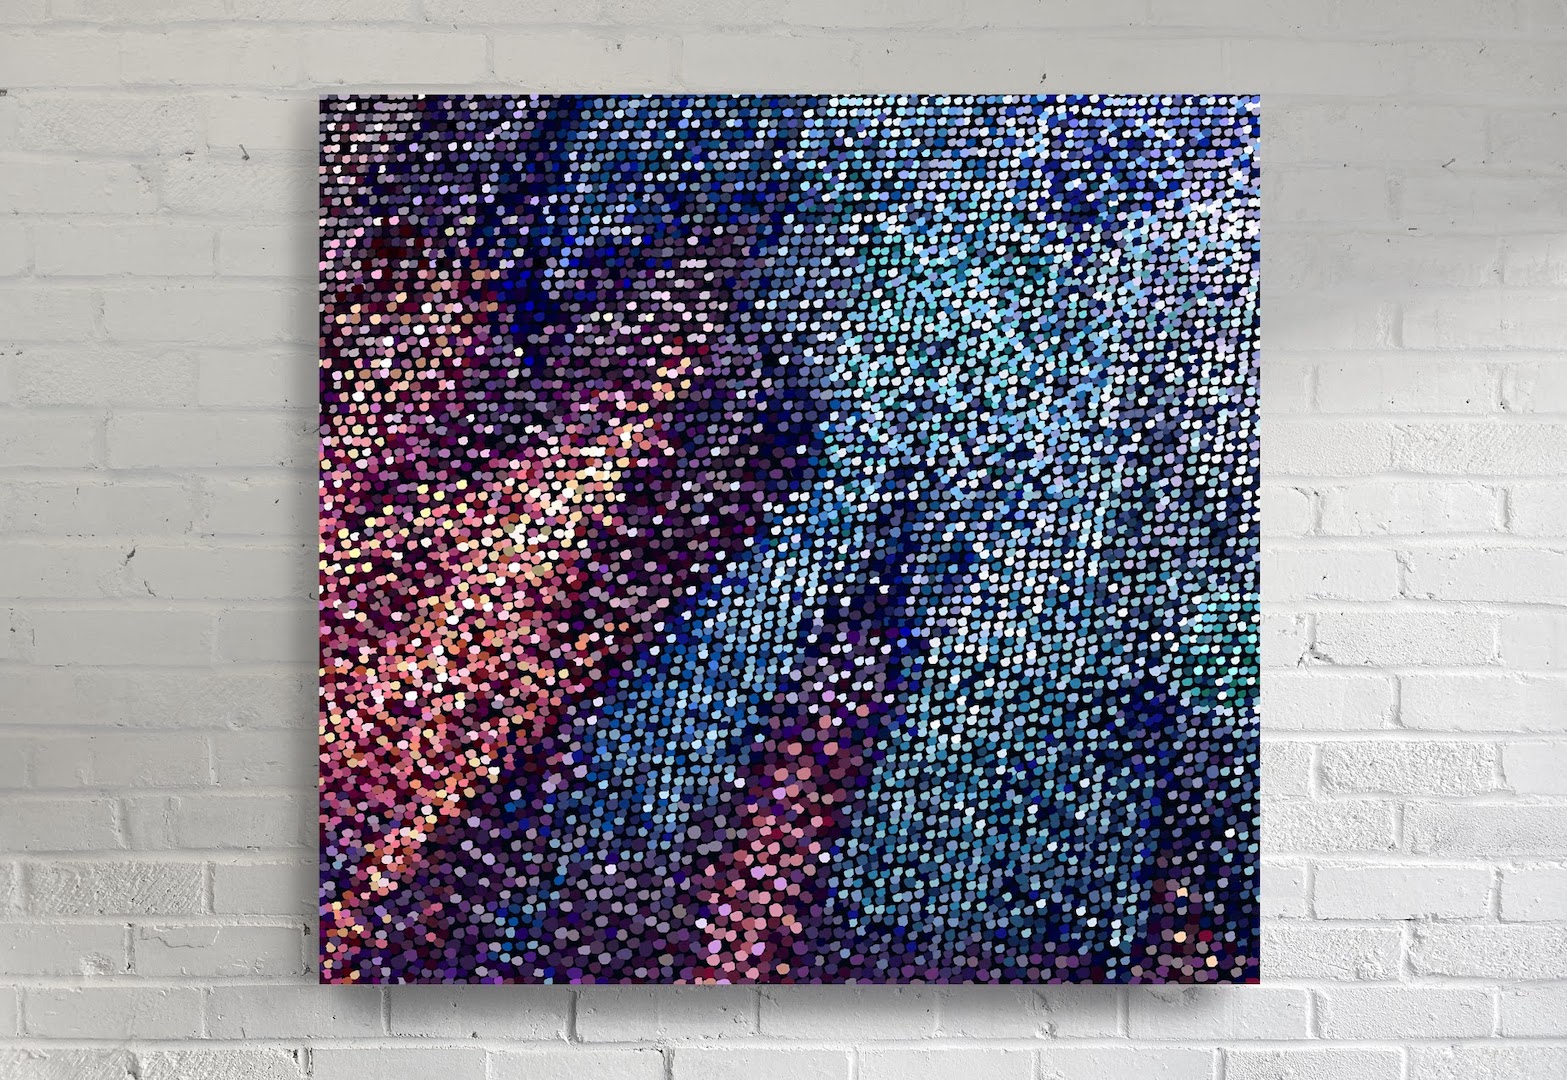 Pixelated Screen Study 3. 2021. Acrylic on canvas. 100 x 100 cm.